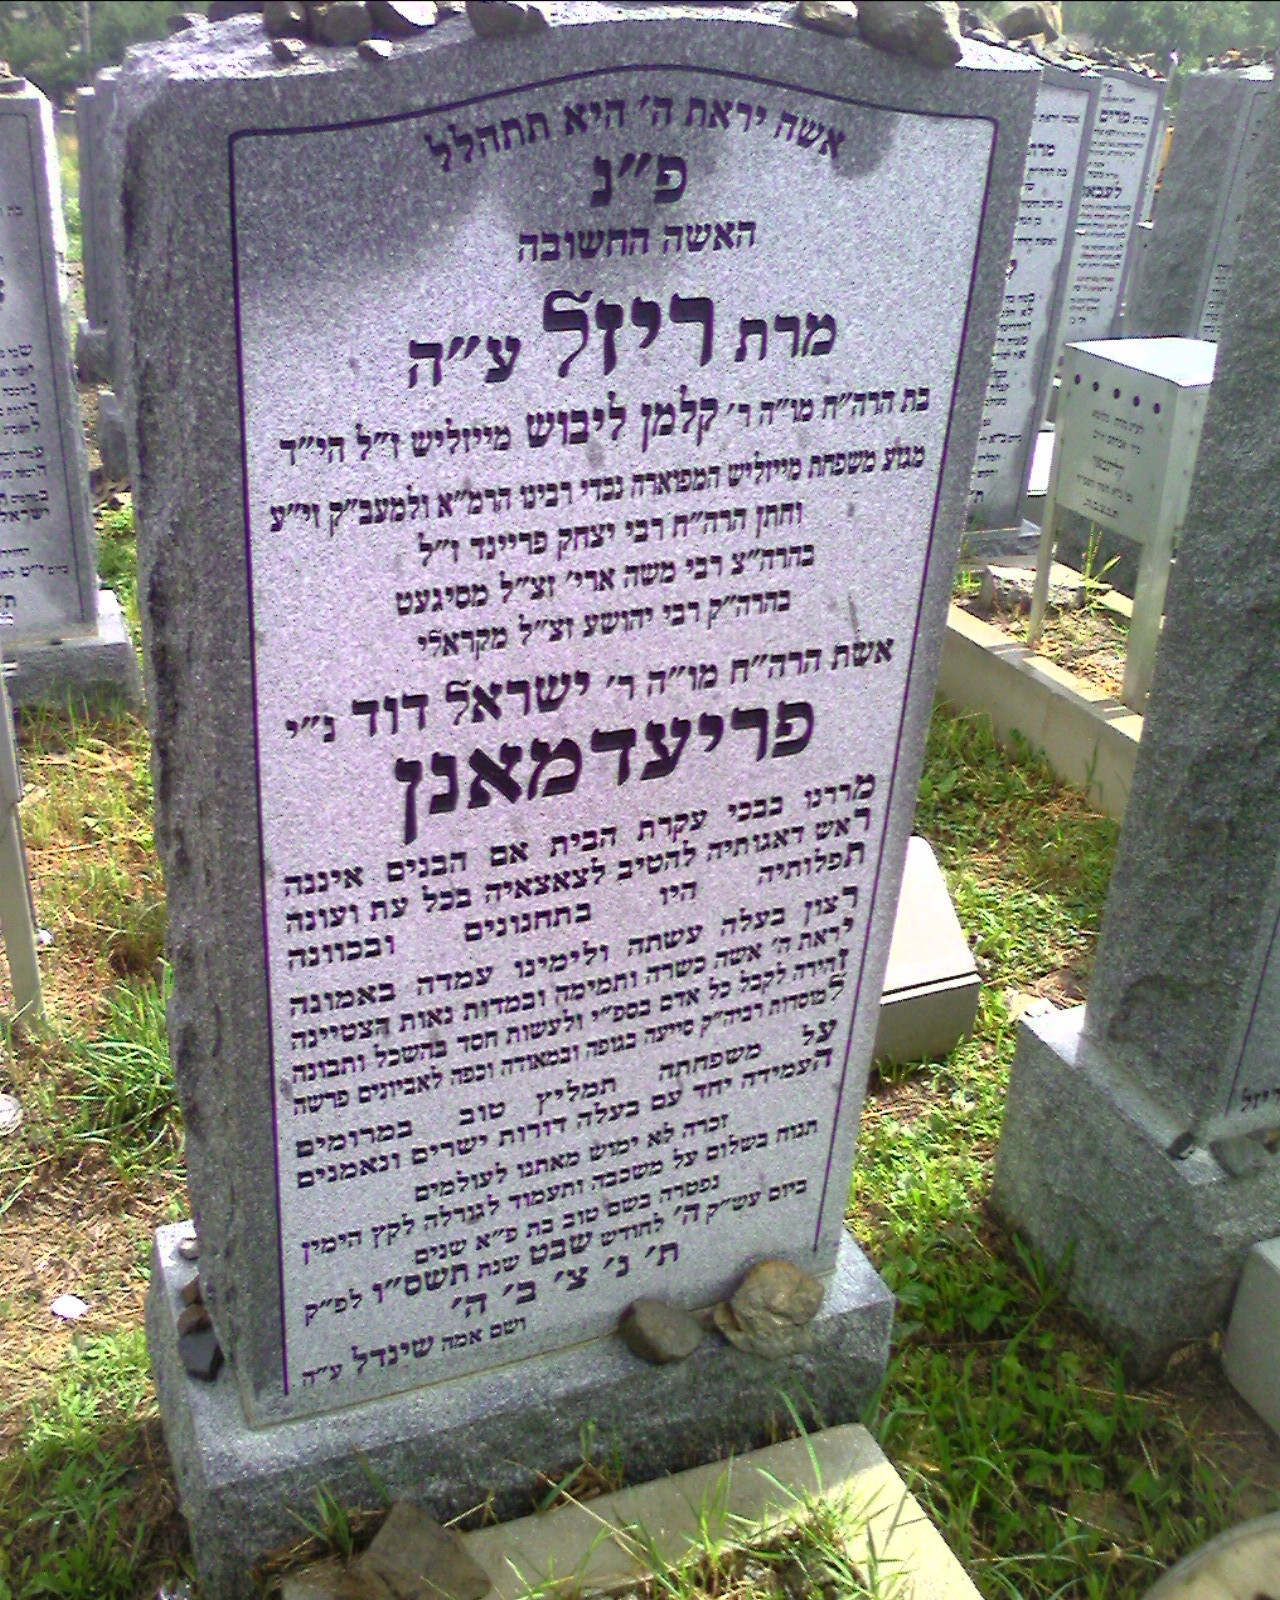 Rabbi Moshe of Israel